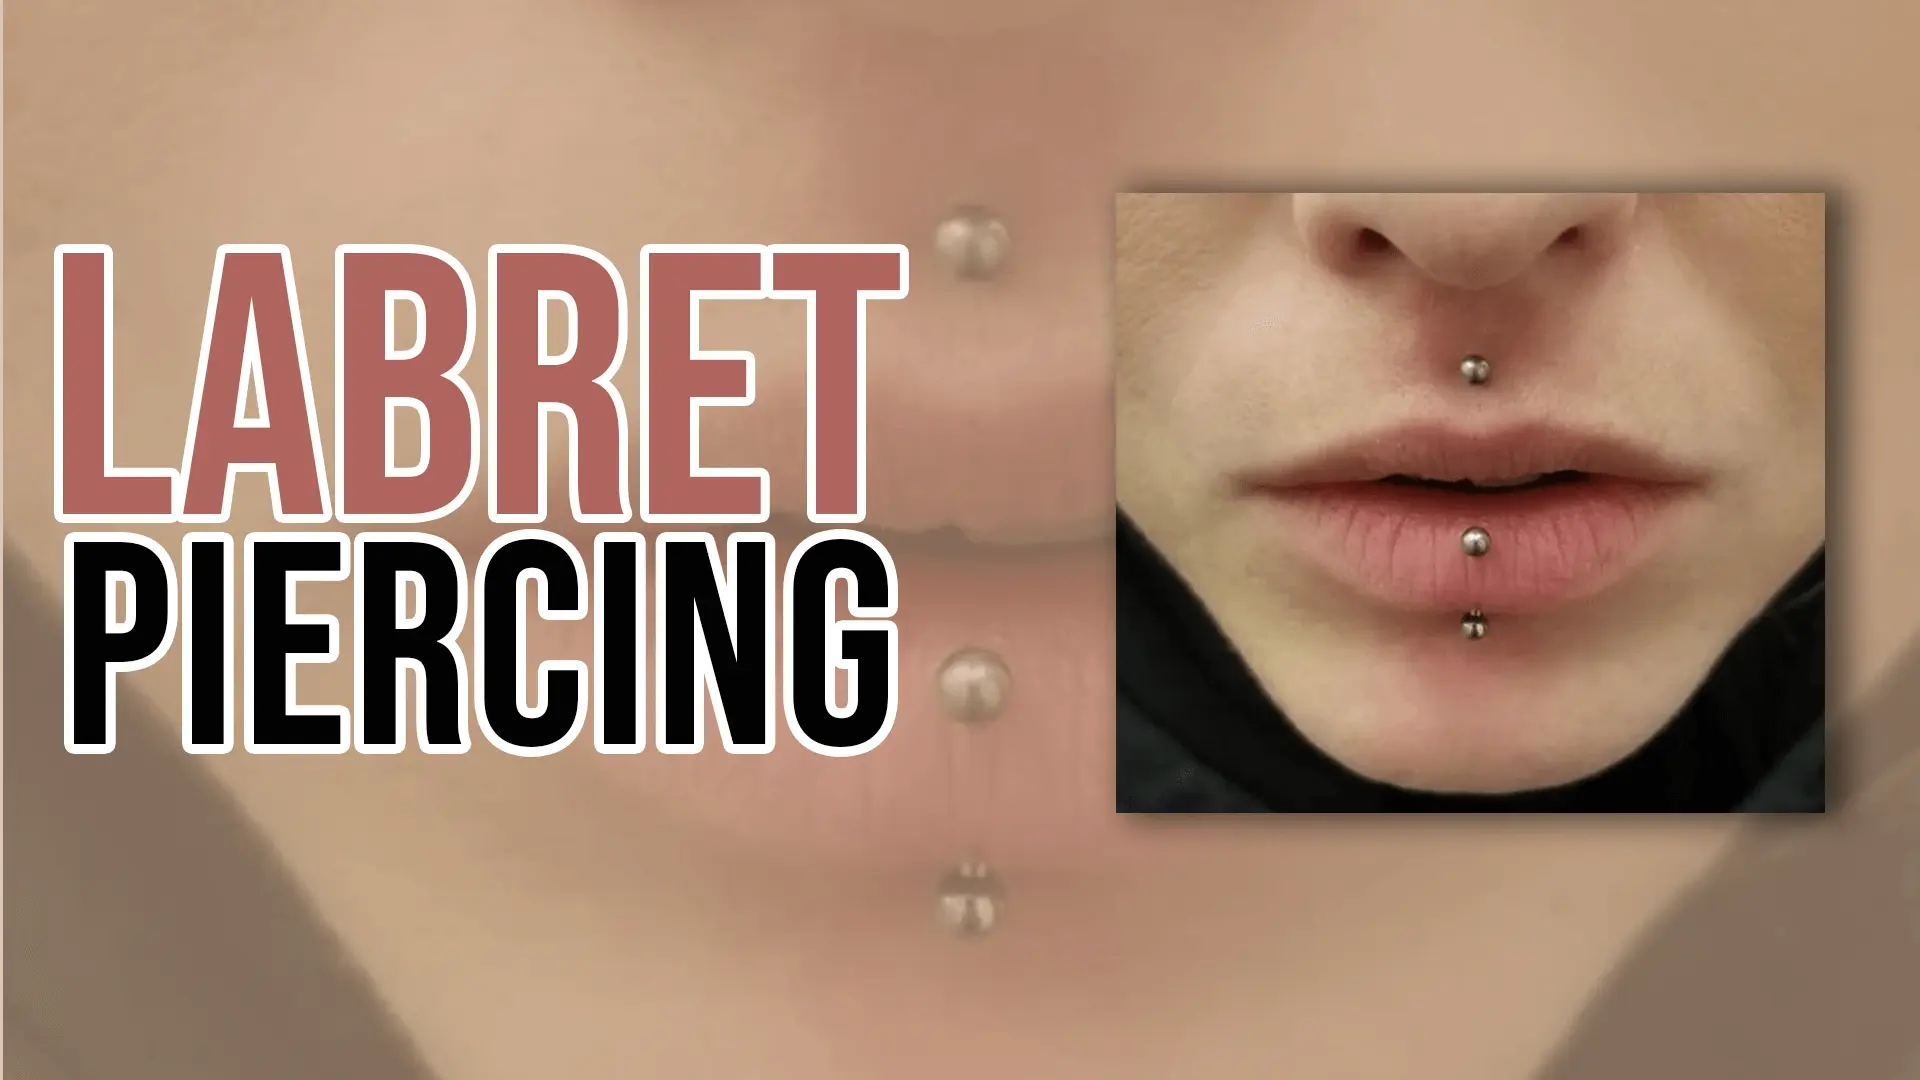 Labret Piercing